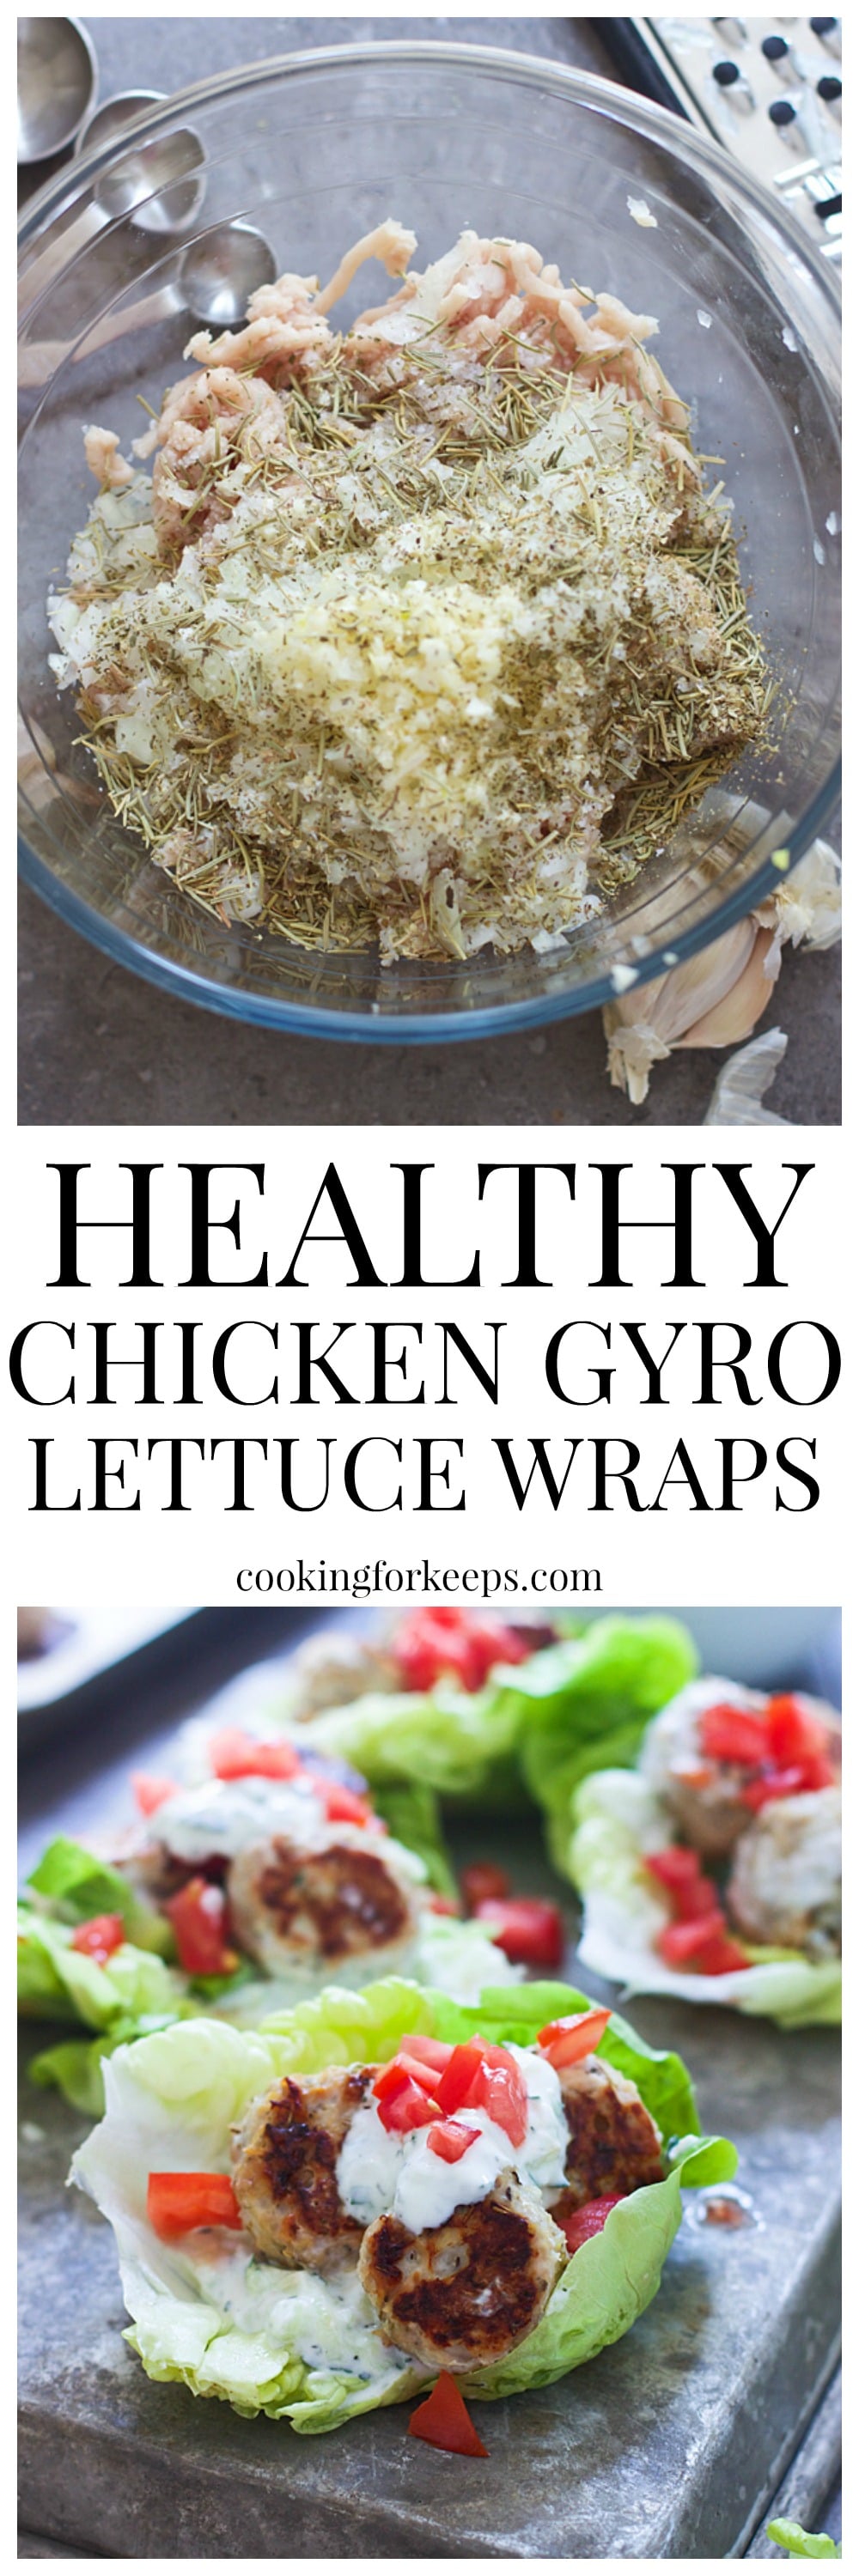 Healthy Chicken Gyro Lettuce Wraps